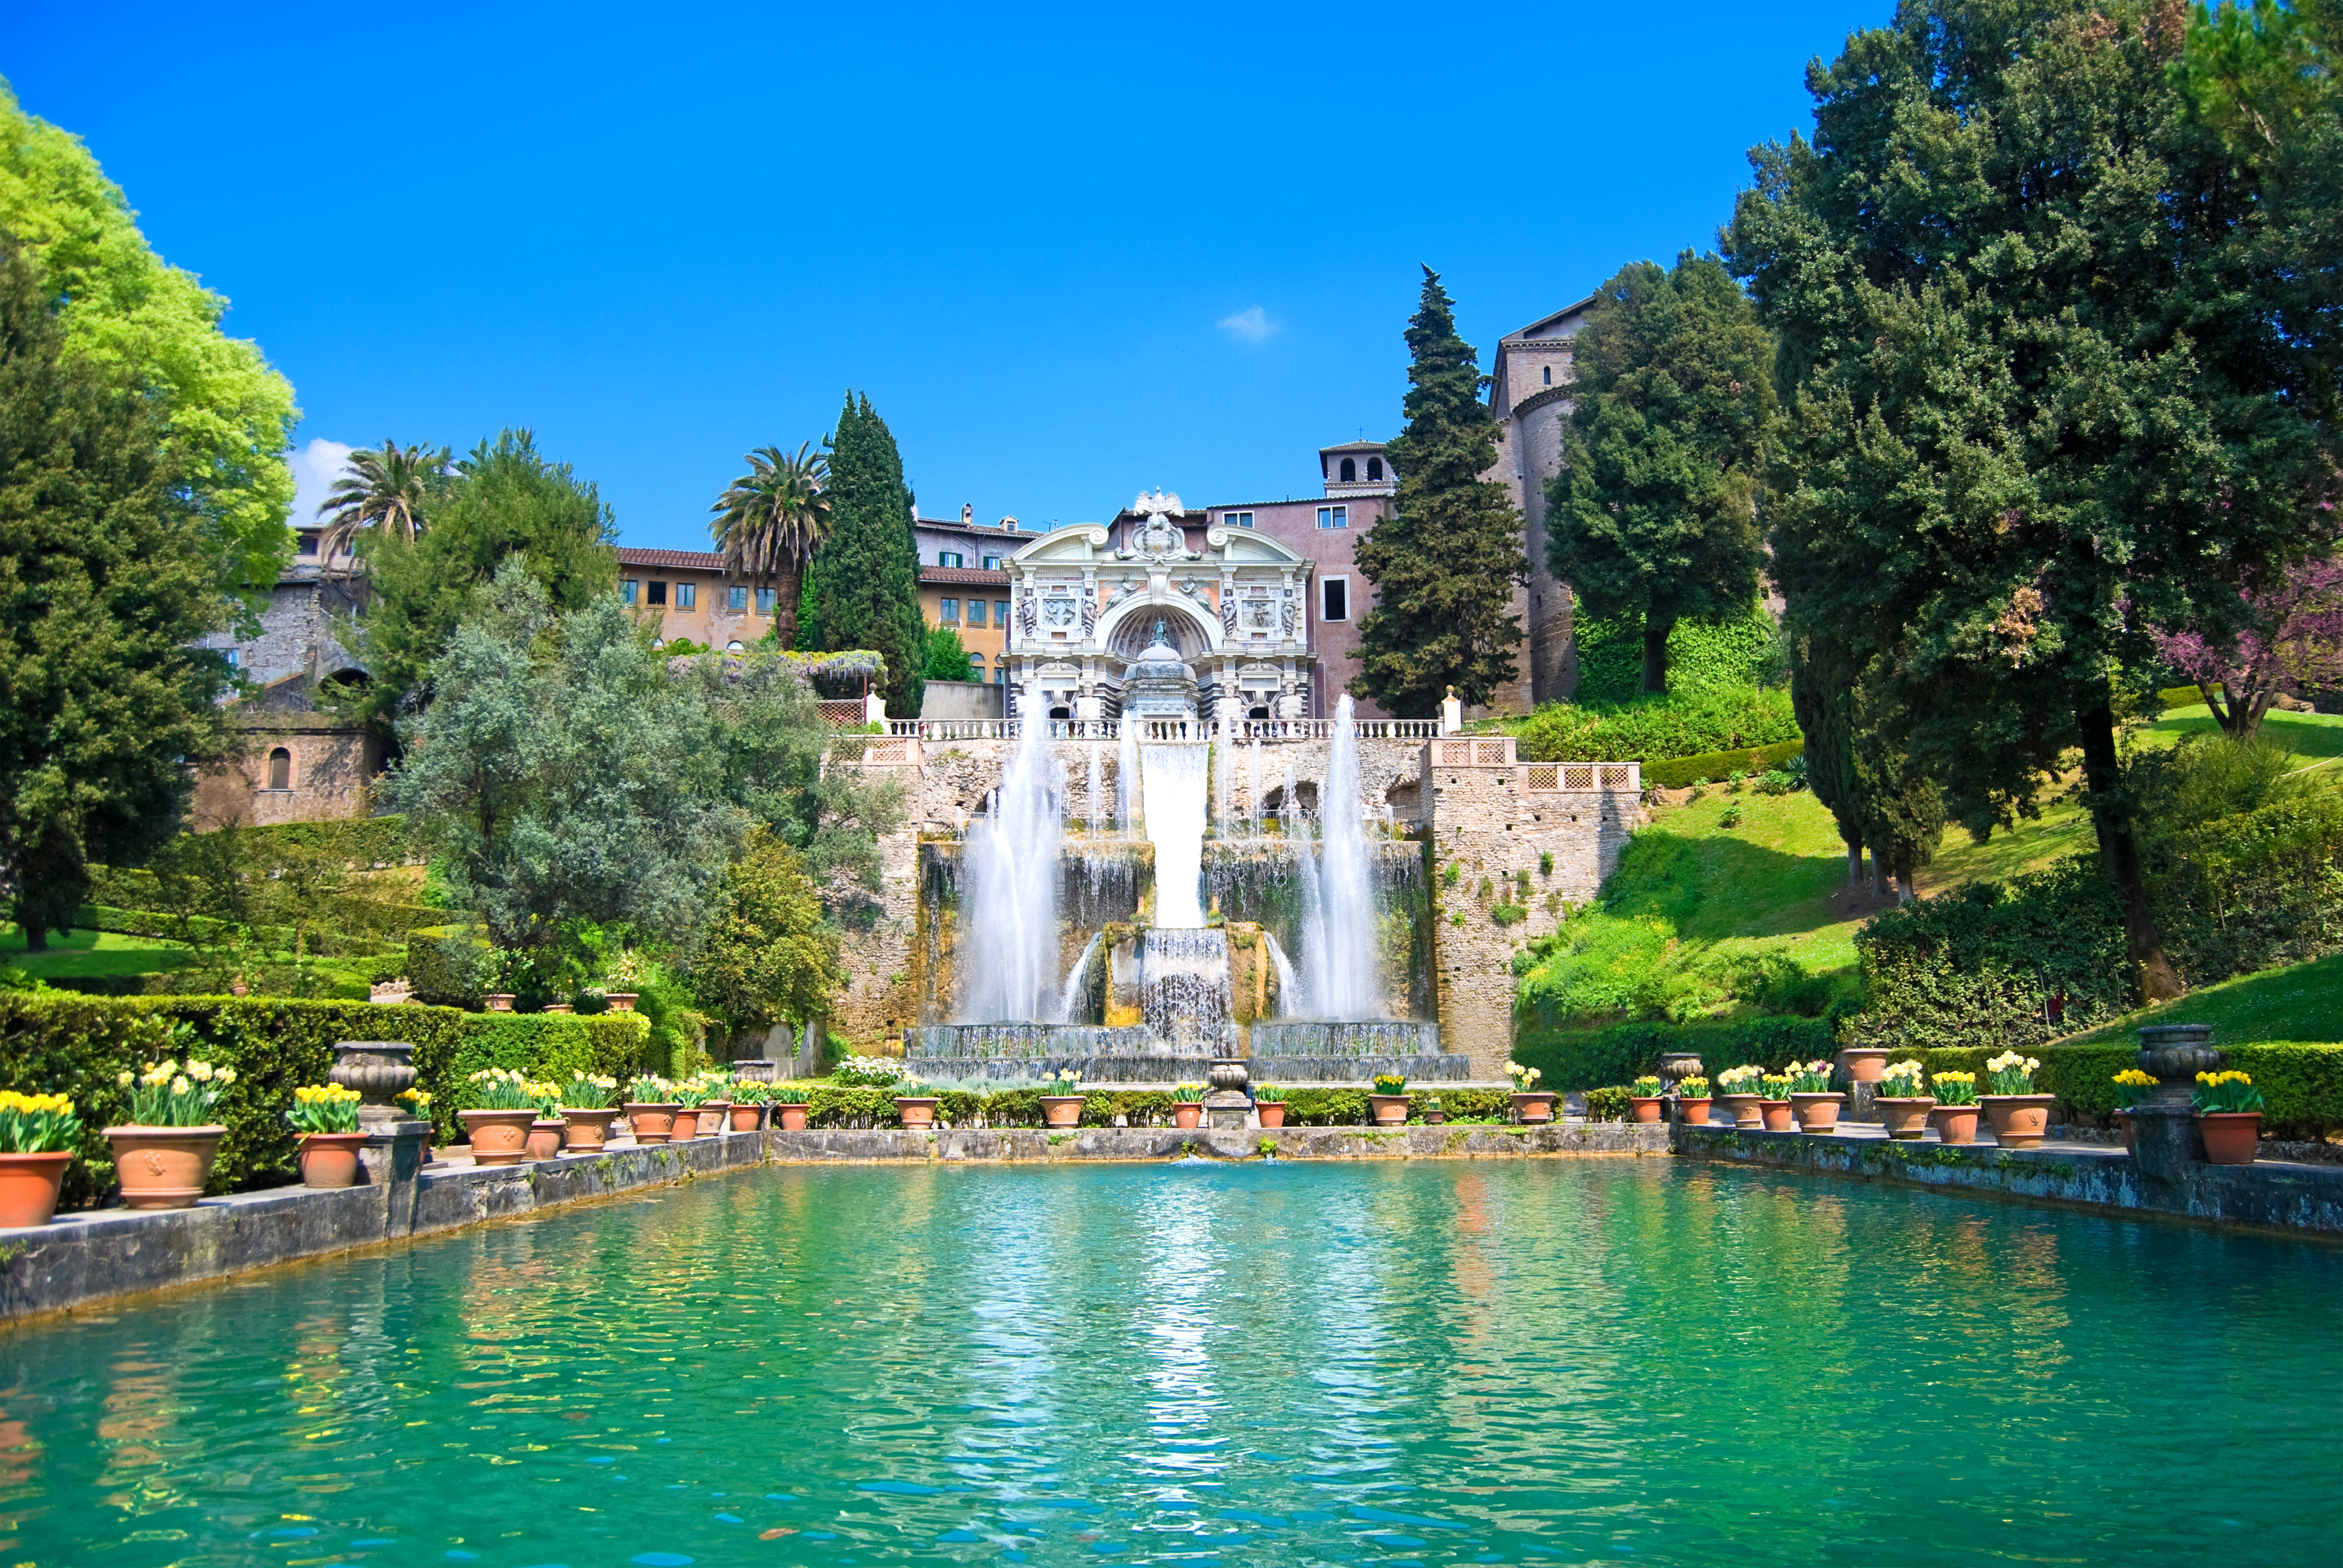 Villa d’Este, Tivoli, Italy